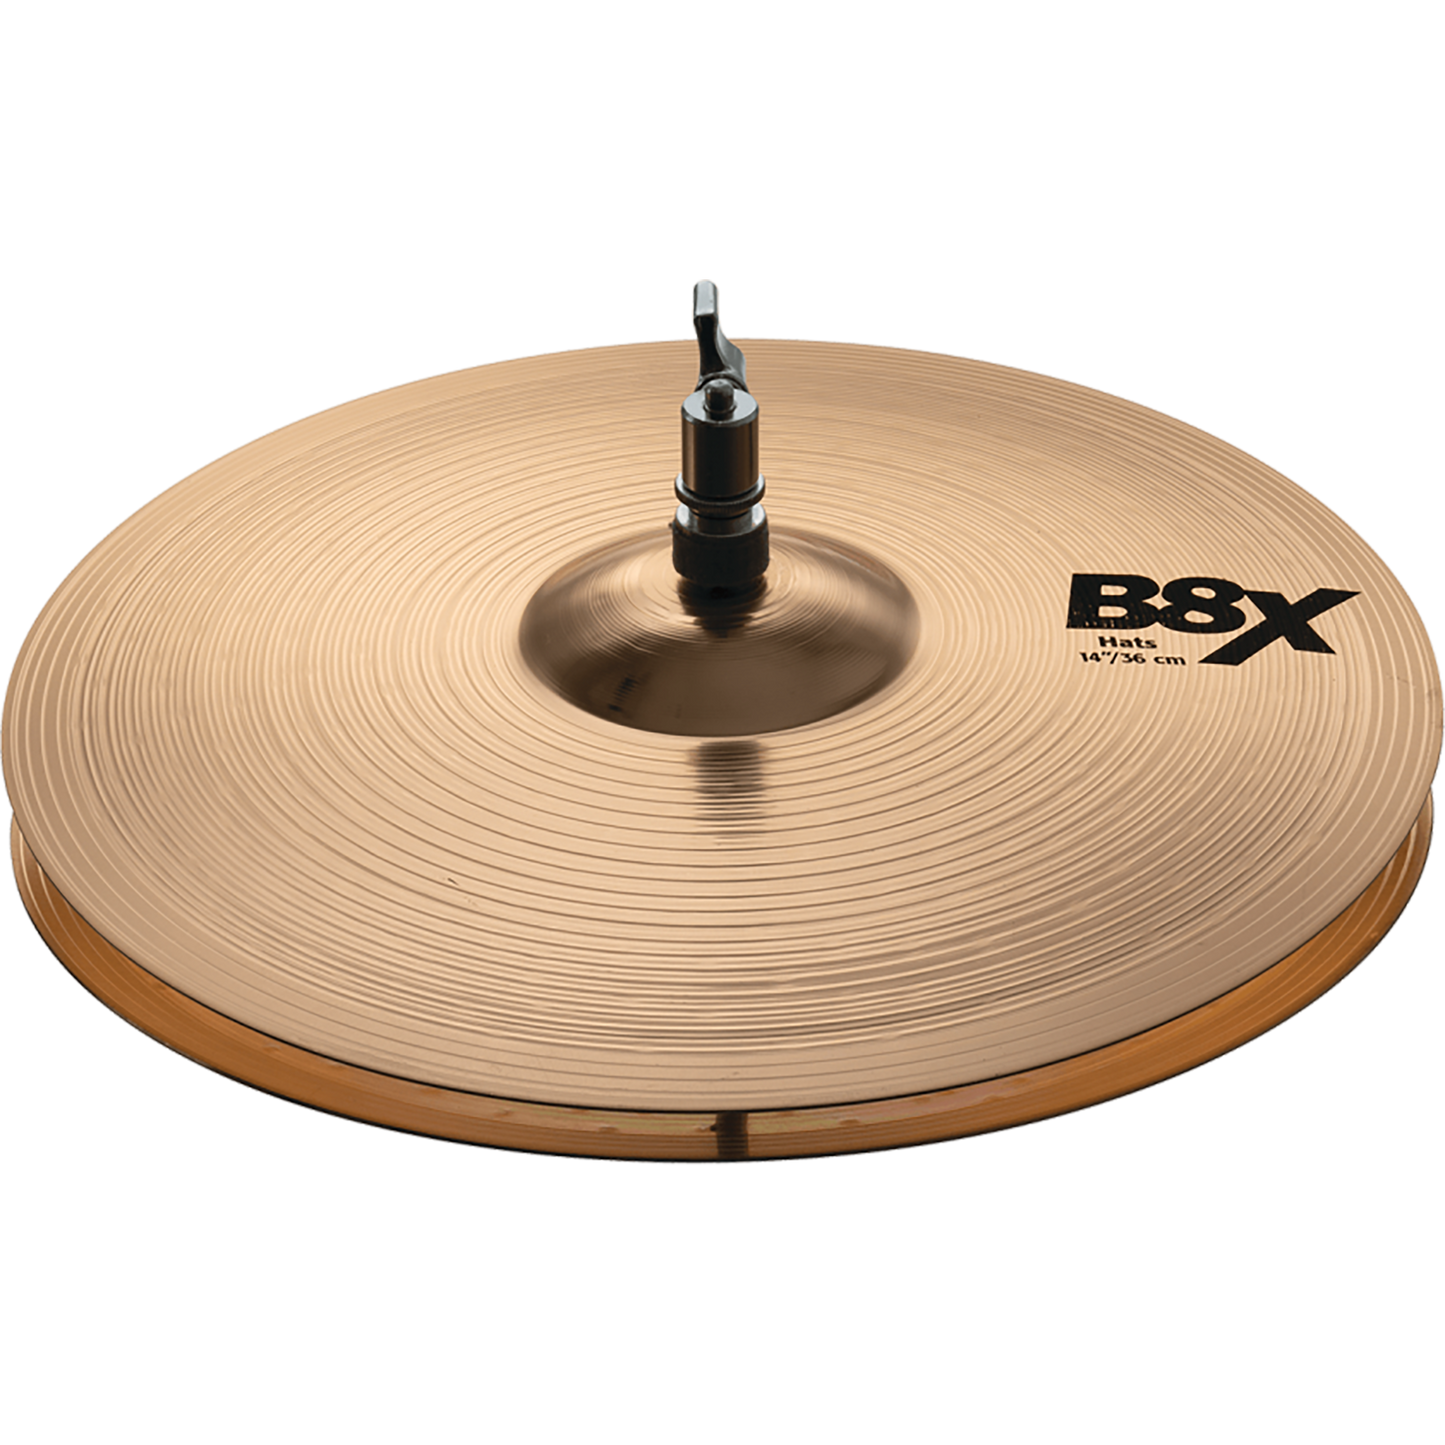 Sabian 14" B8X Hi-Hat Cymbals